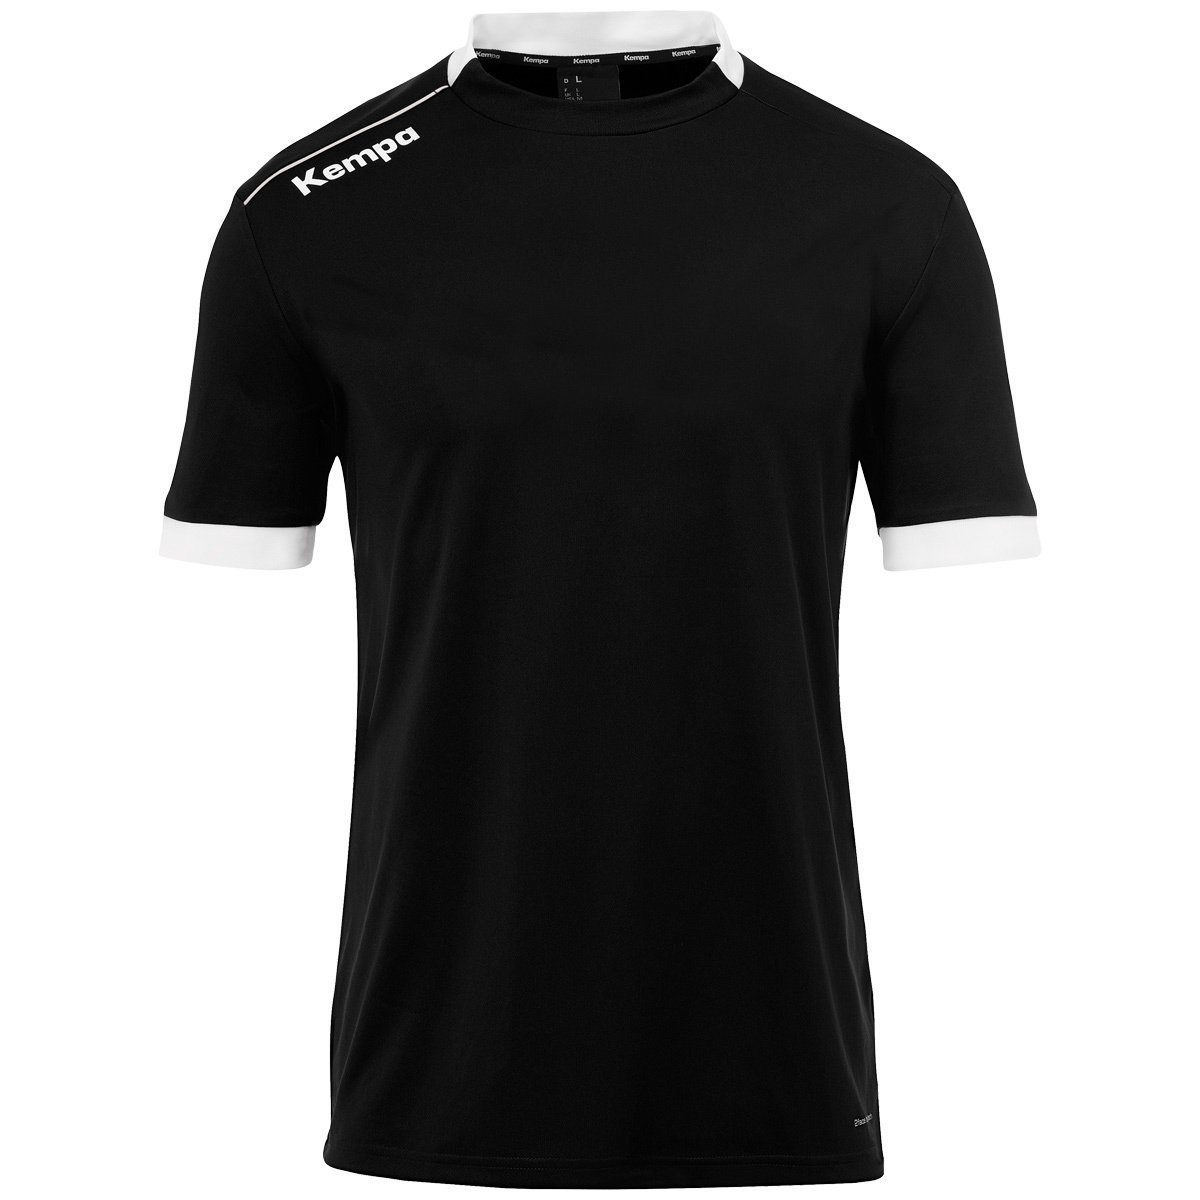 Kempa schwarz/weiß Kurzarmshirt Kempa PLAYER Shirt TRIKOT